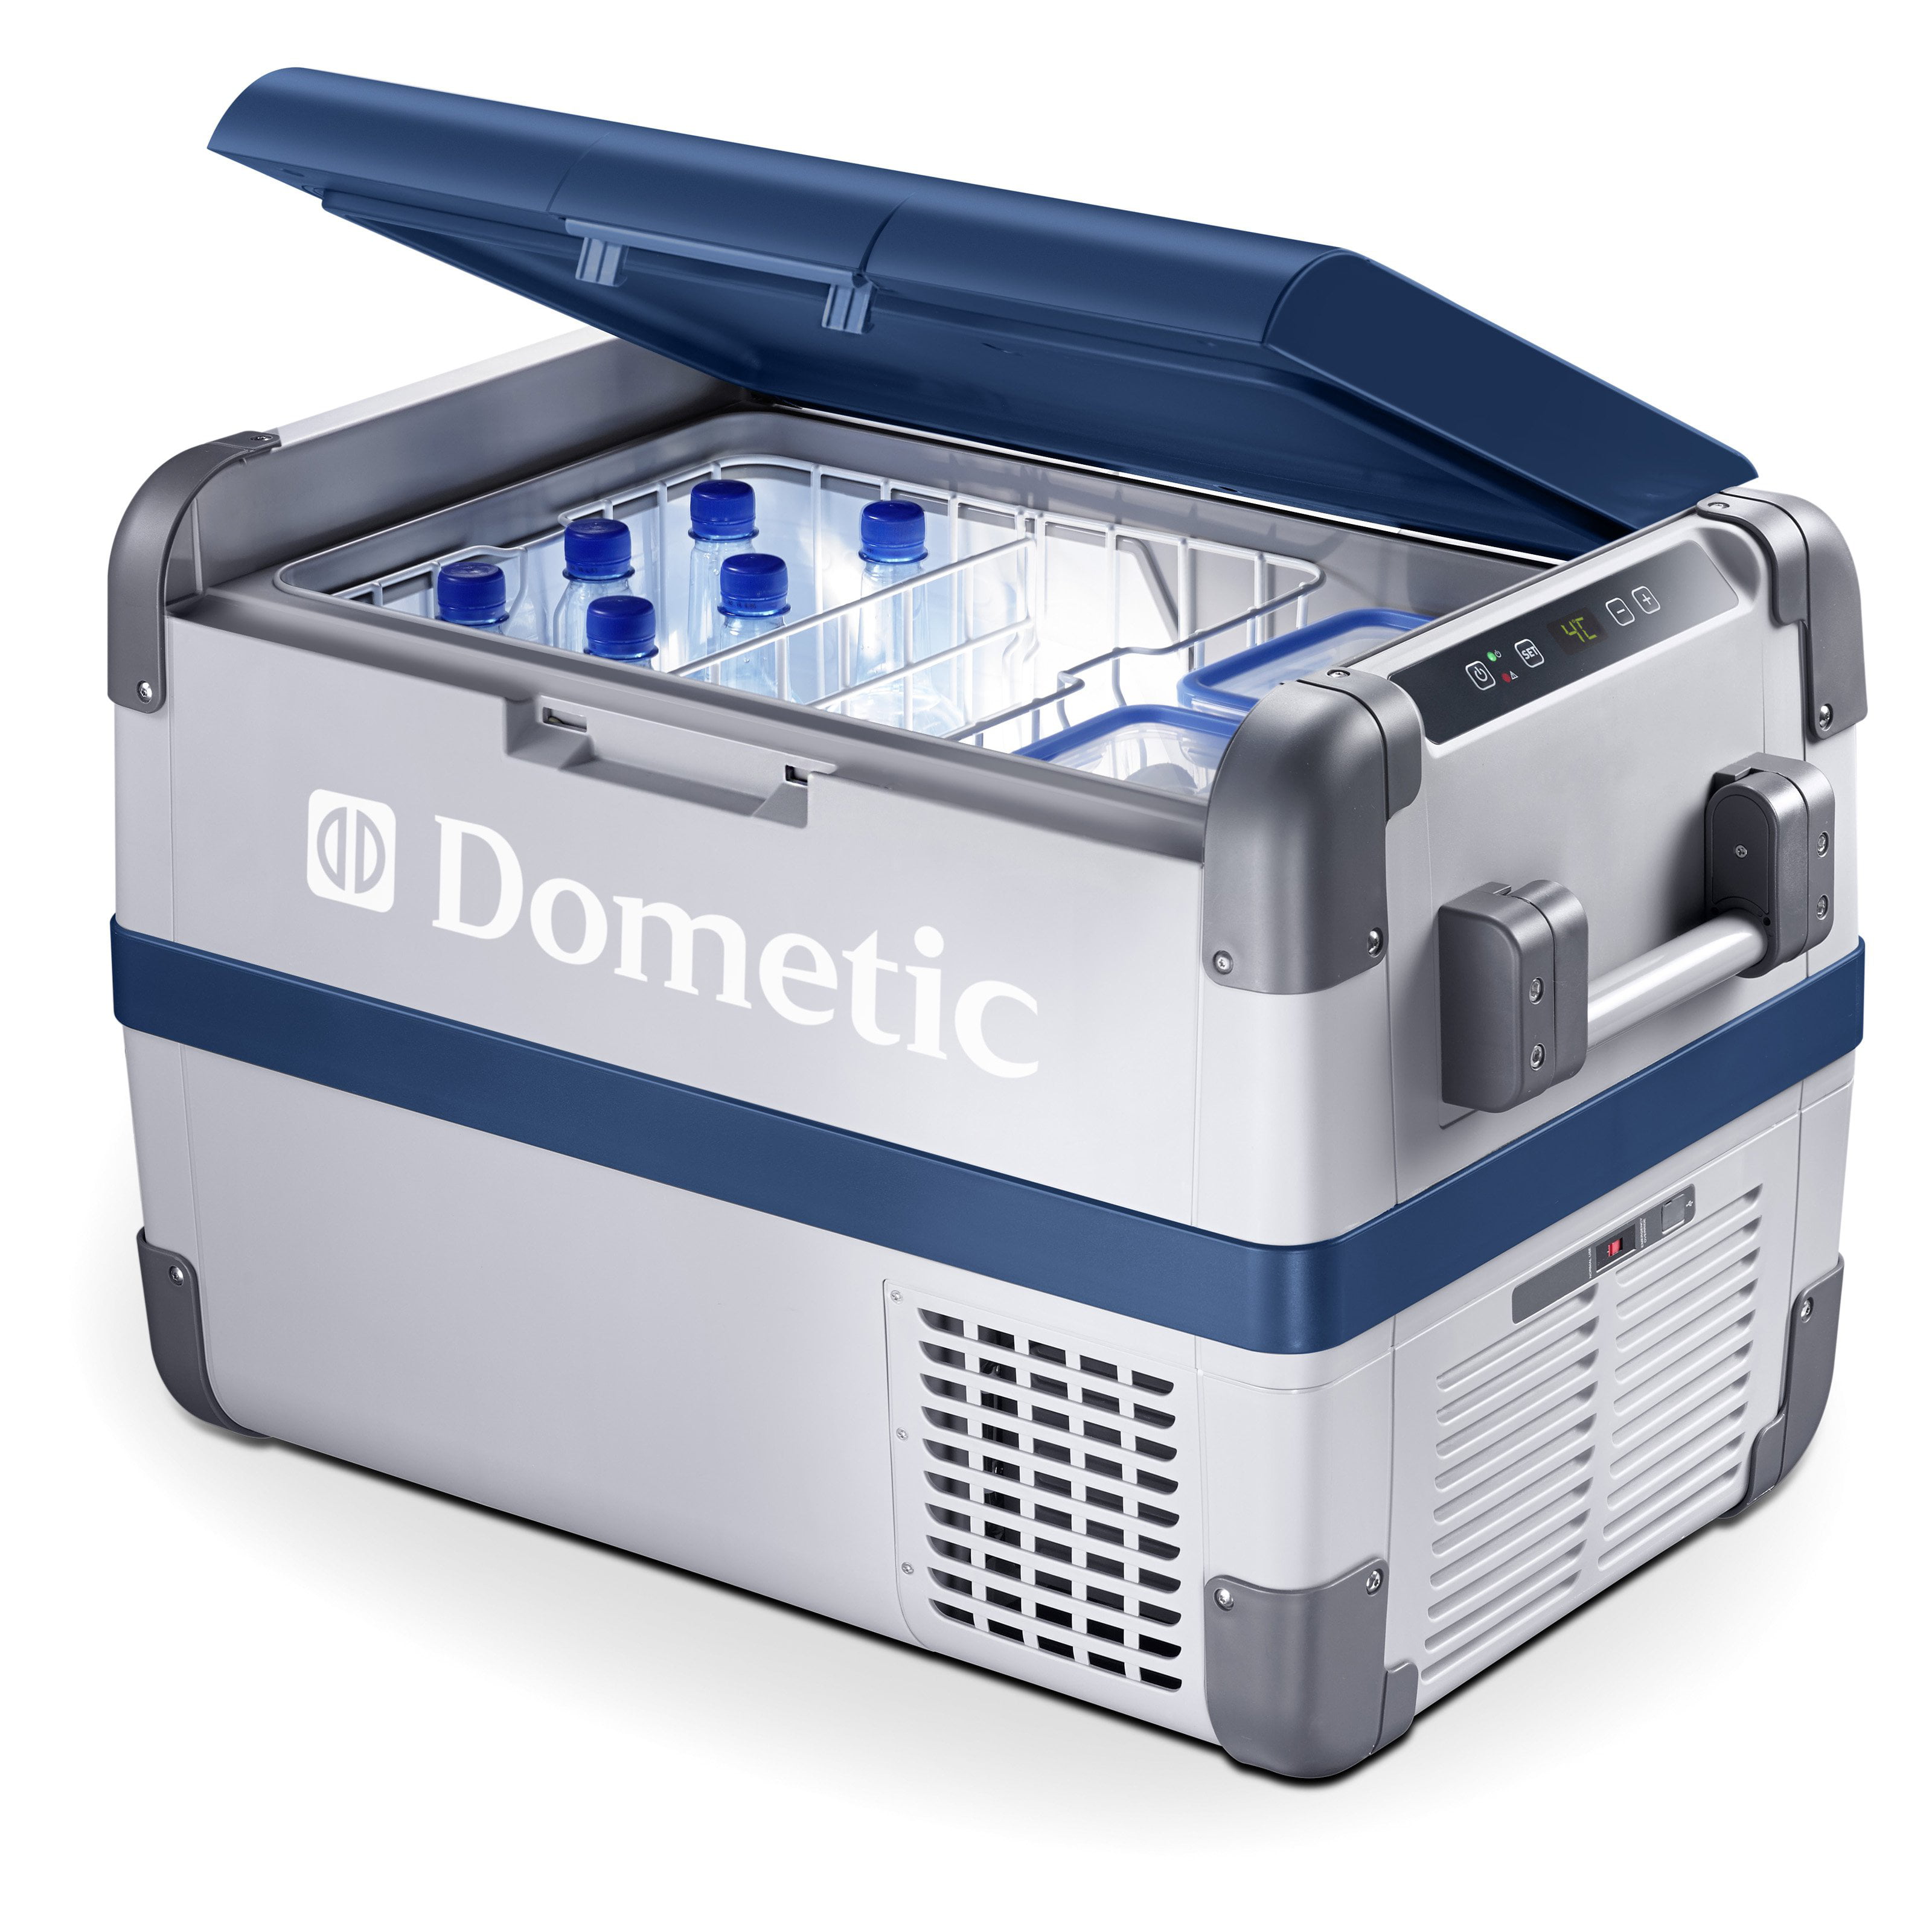 Dometic CFX50US Portable Electric Cooler Refrigerator/Freezer 1.8 cu. Ft.